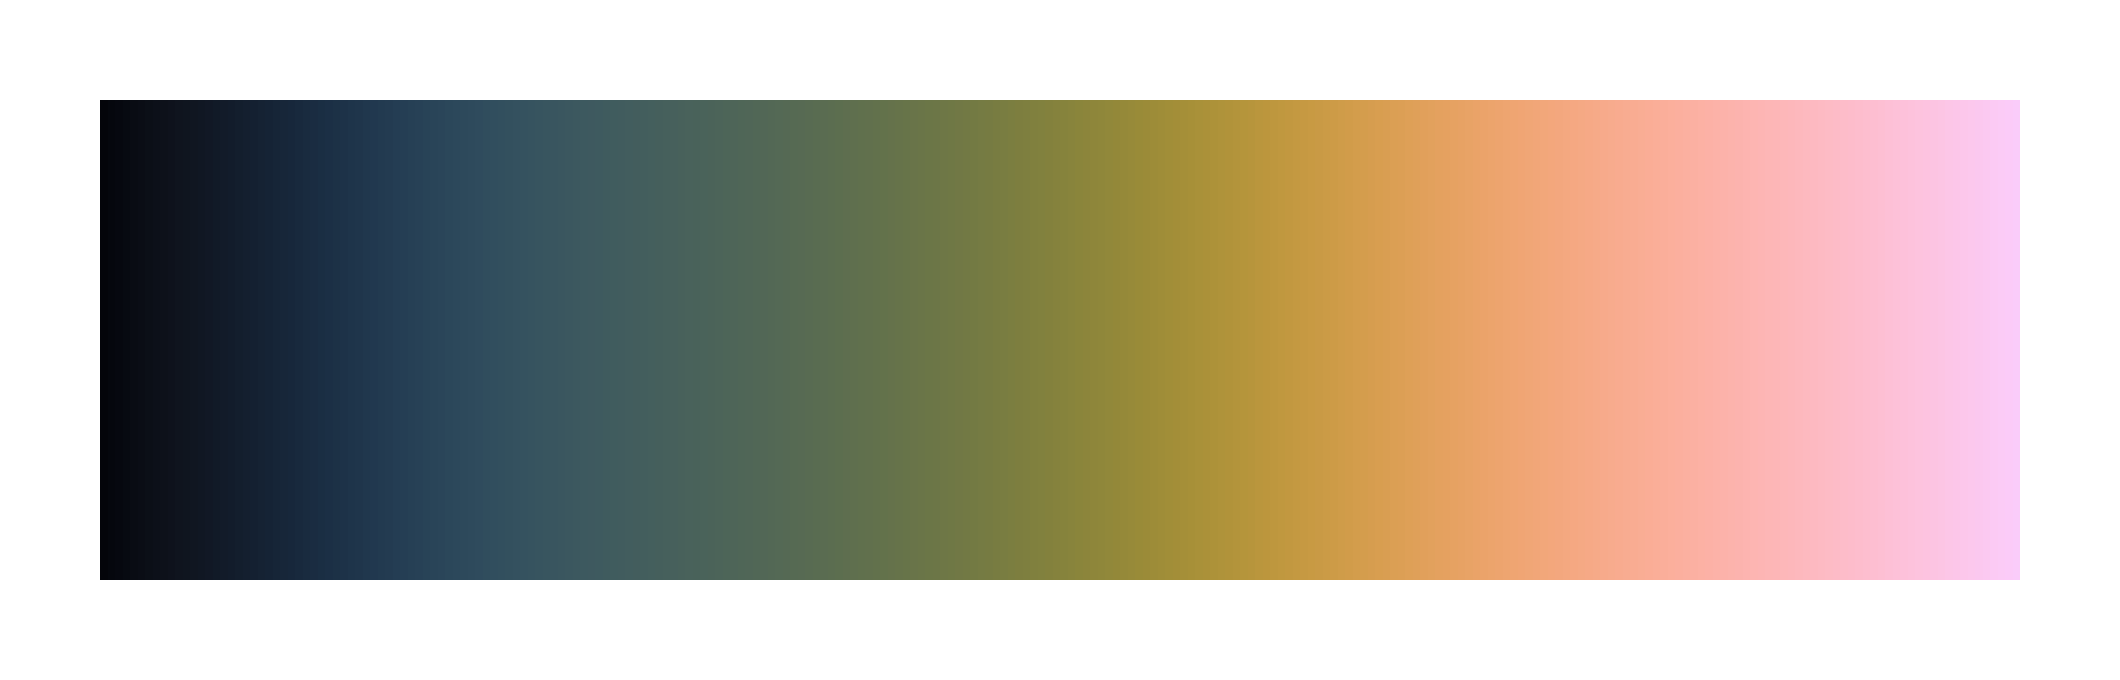 batlowK scientific color palette by Fabio Crameri